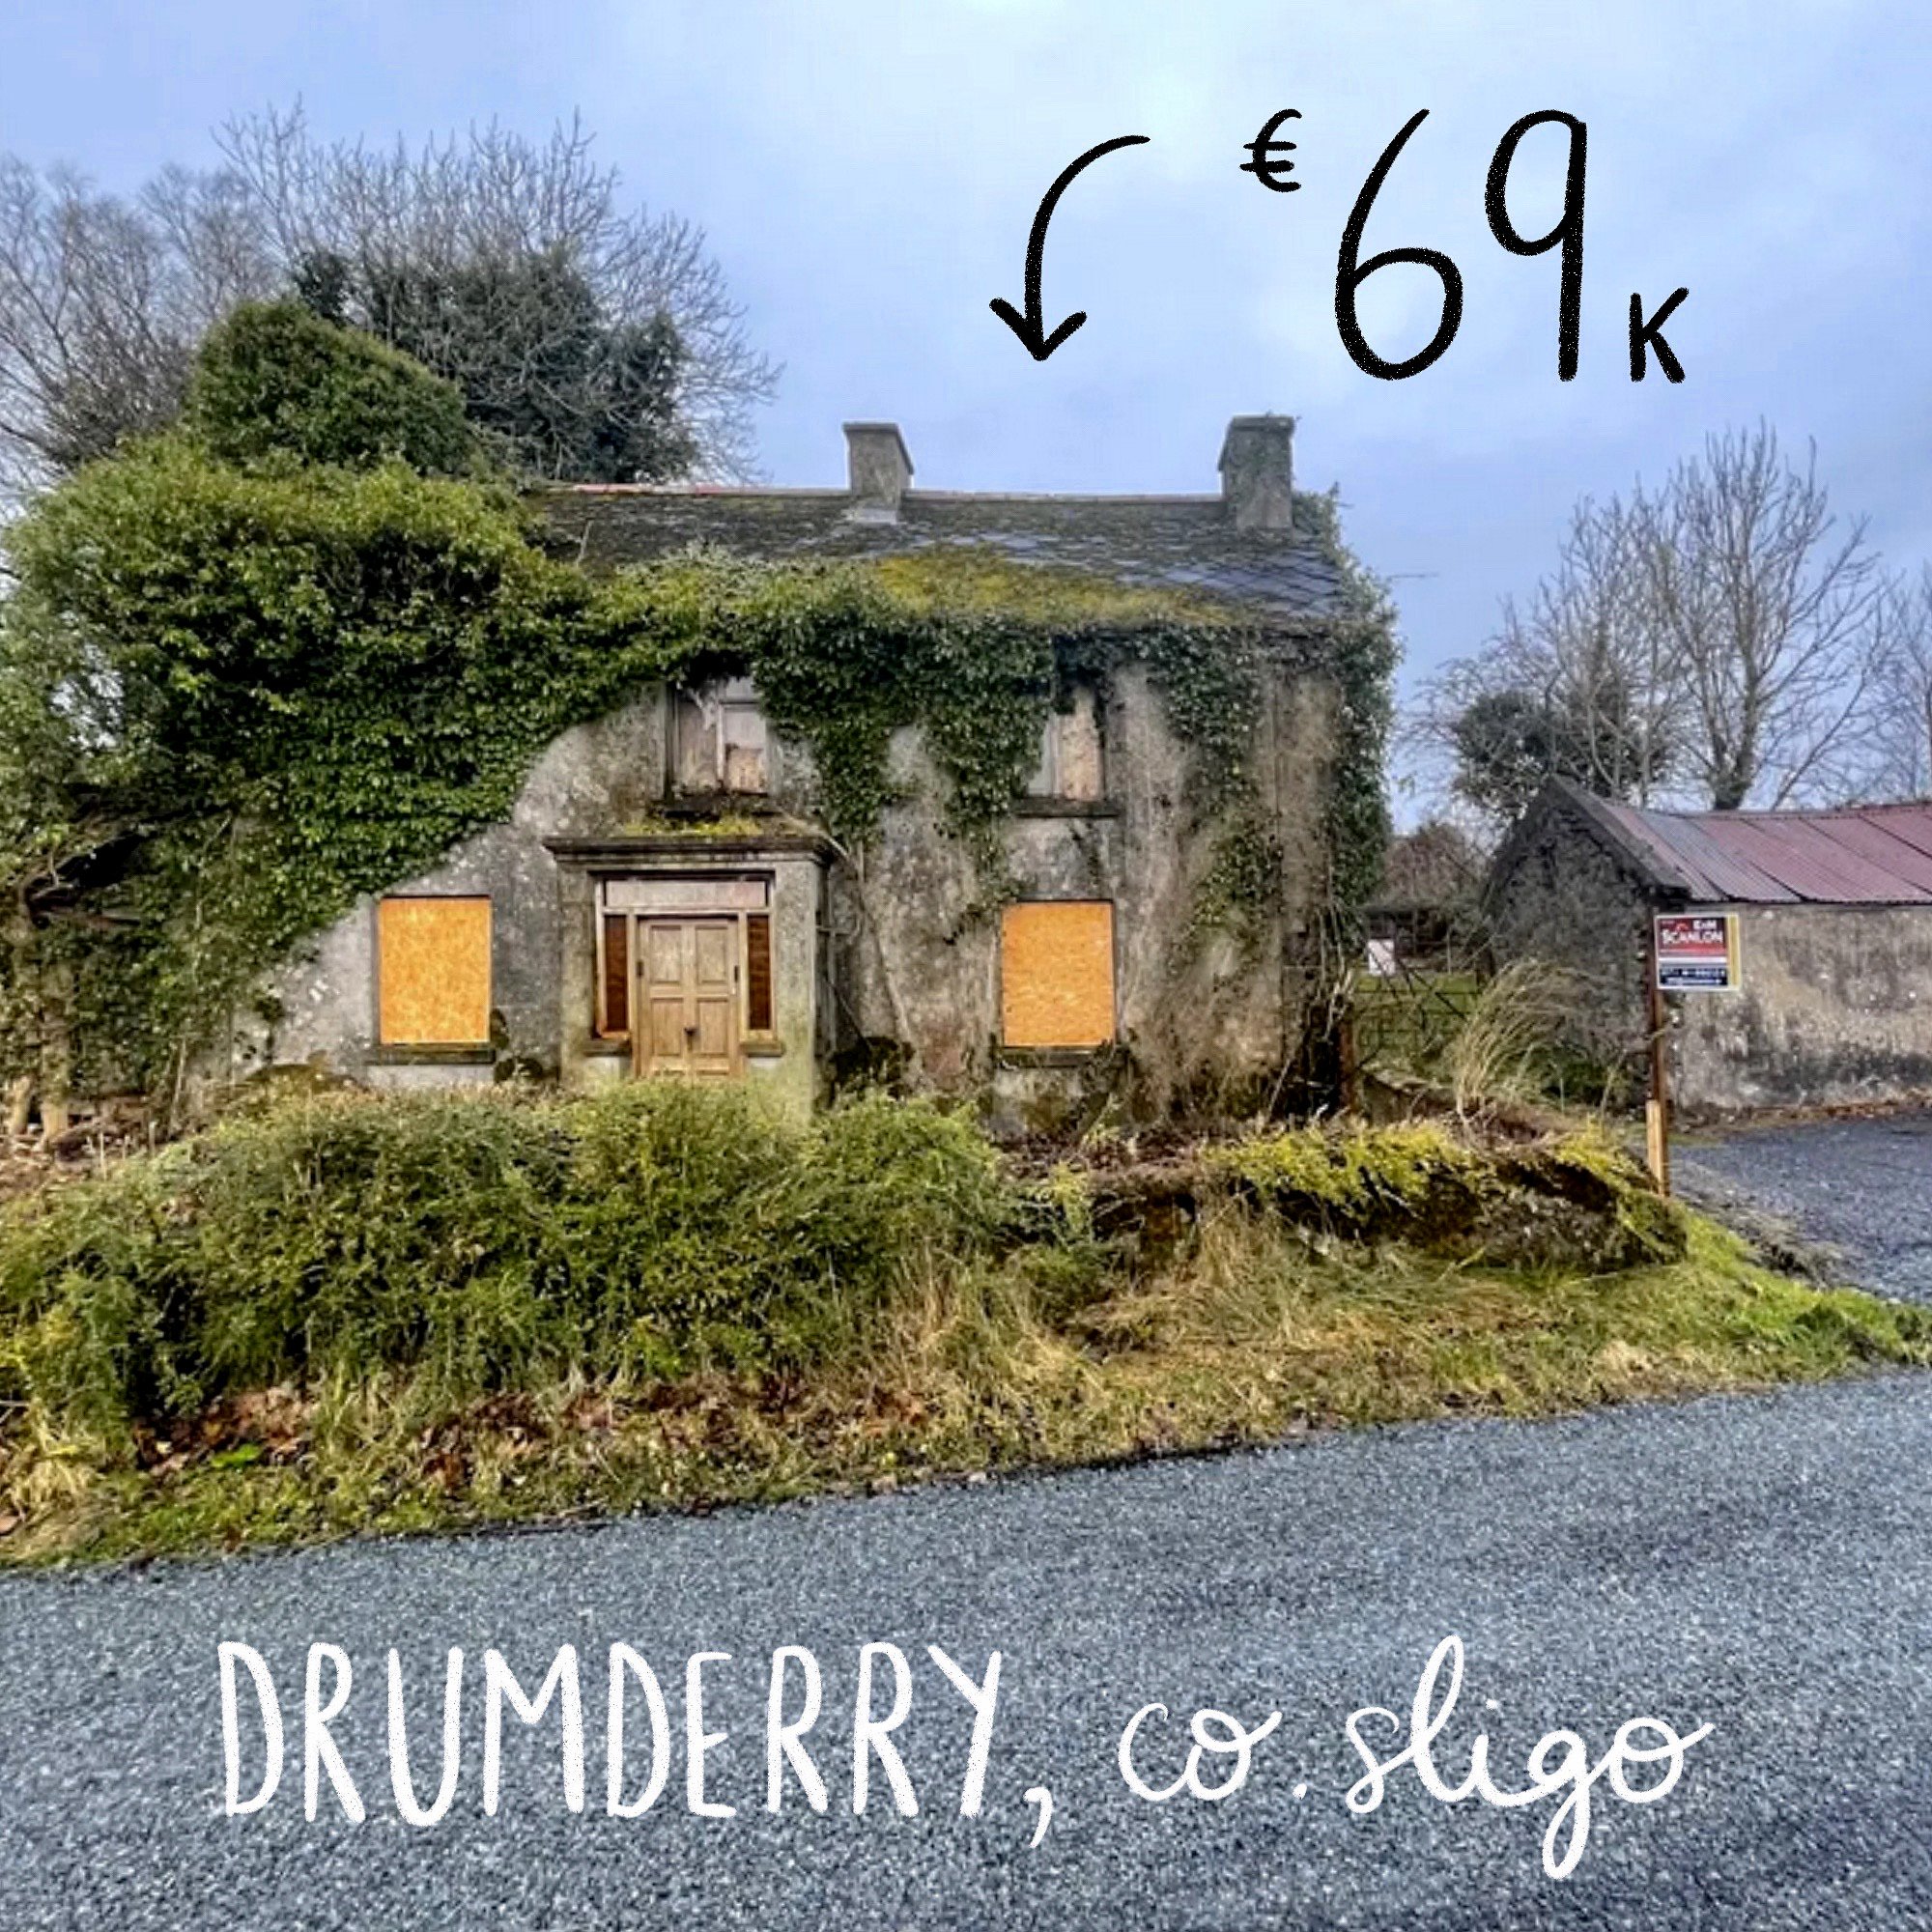 Drumderry, Castlebaldwin, Co. Sligo. €69k